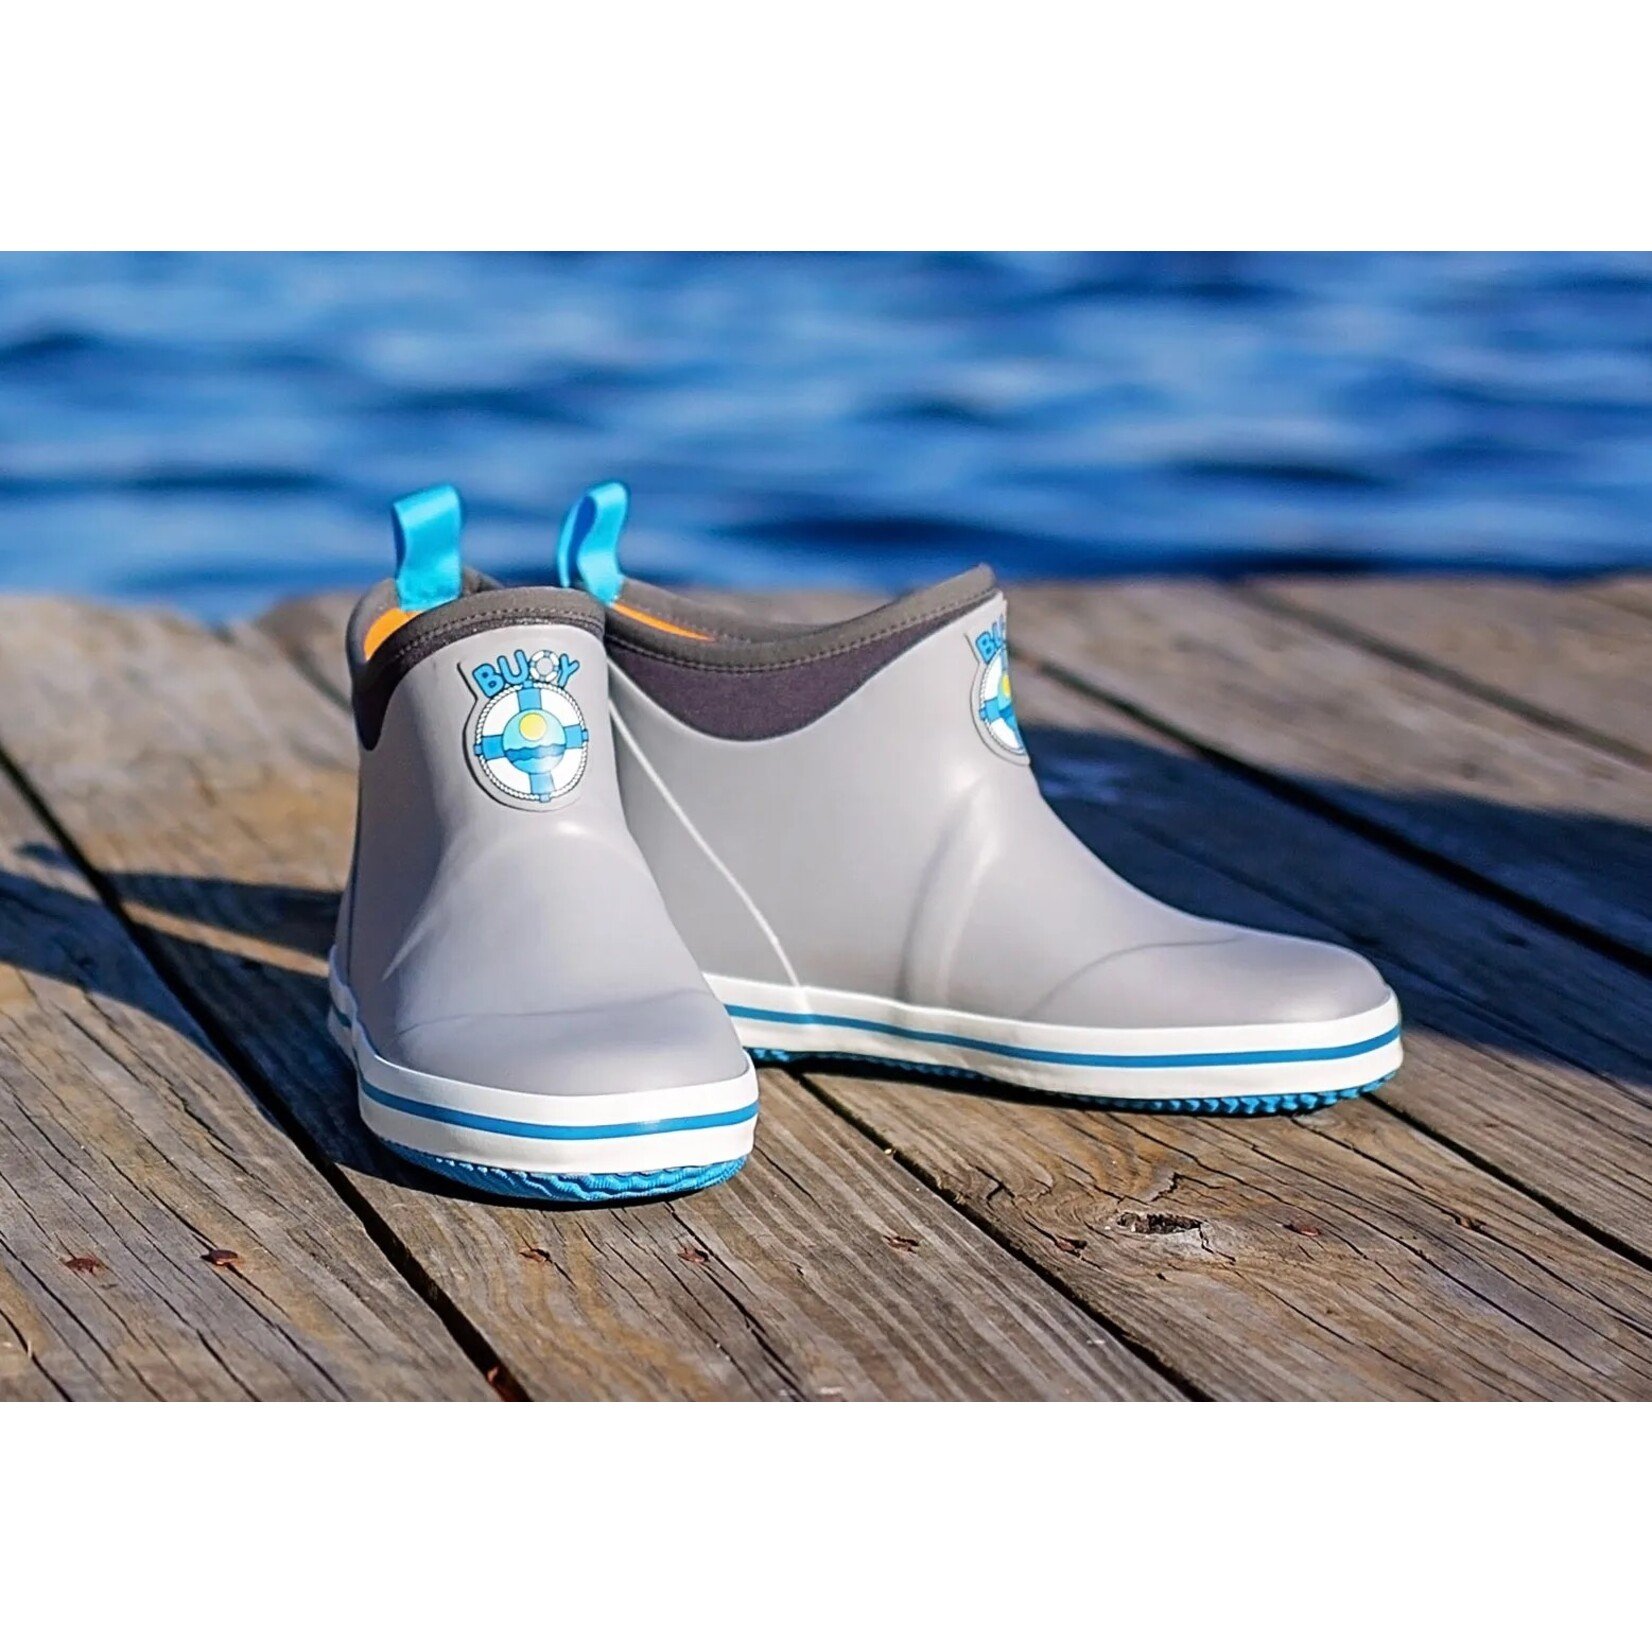 https://cdn.shoplightspeed.com/shops/648151/files/54662285/1652x1652x2/buoy-boots-buoy-boots-kids-ankle-boots.jpg